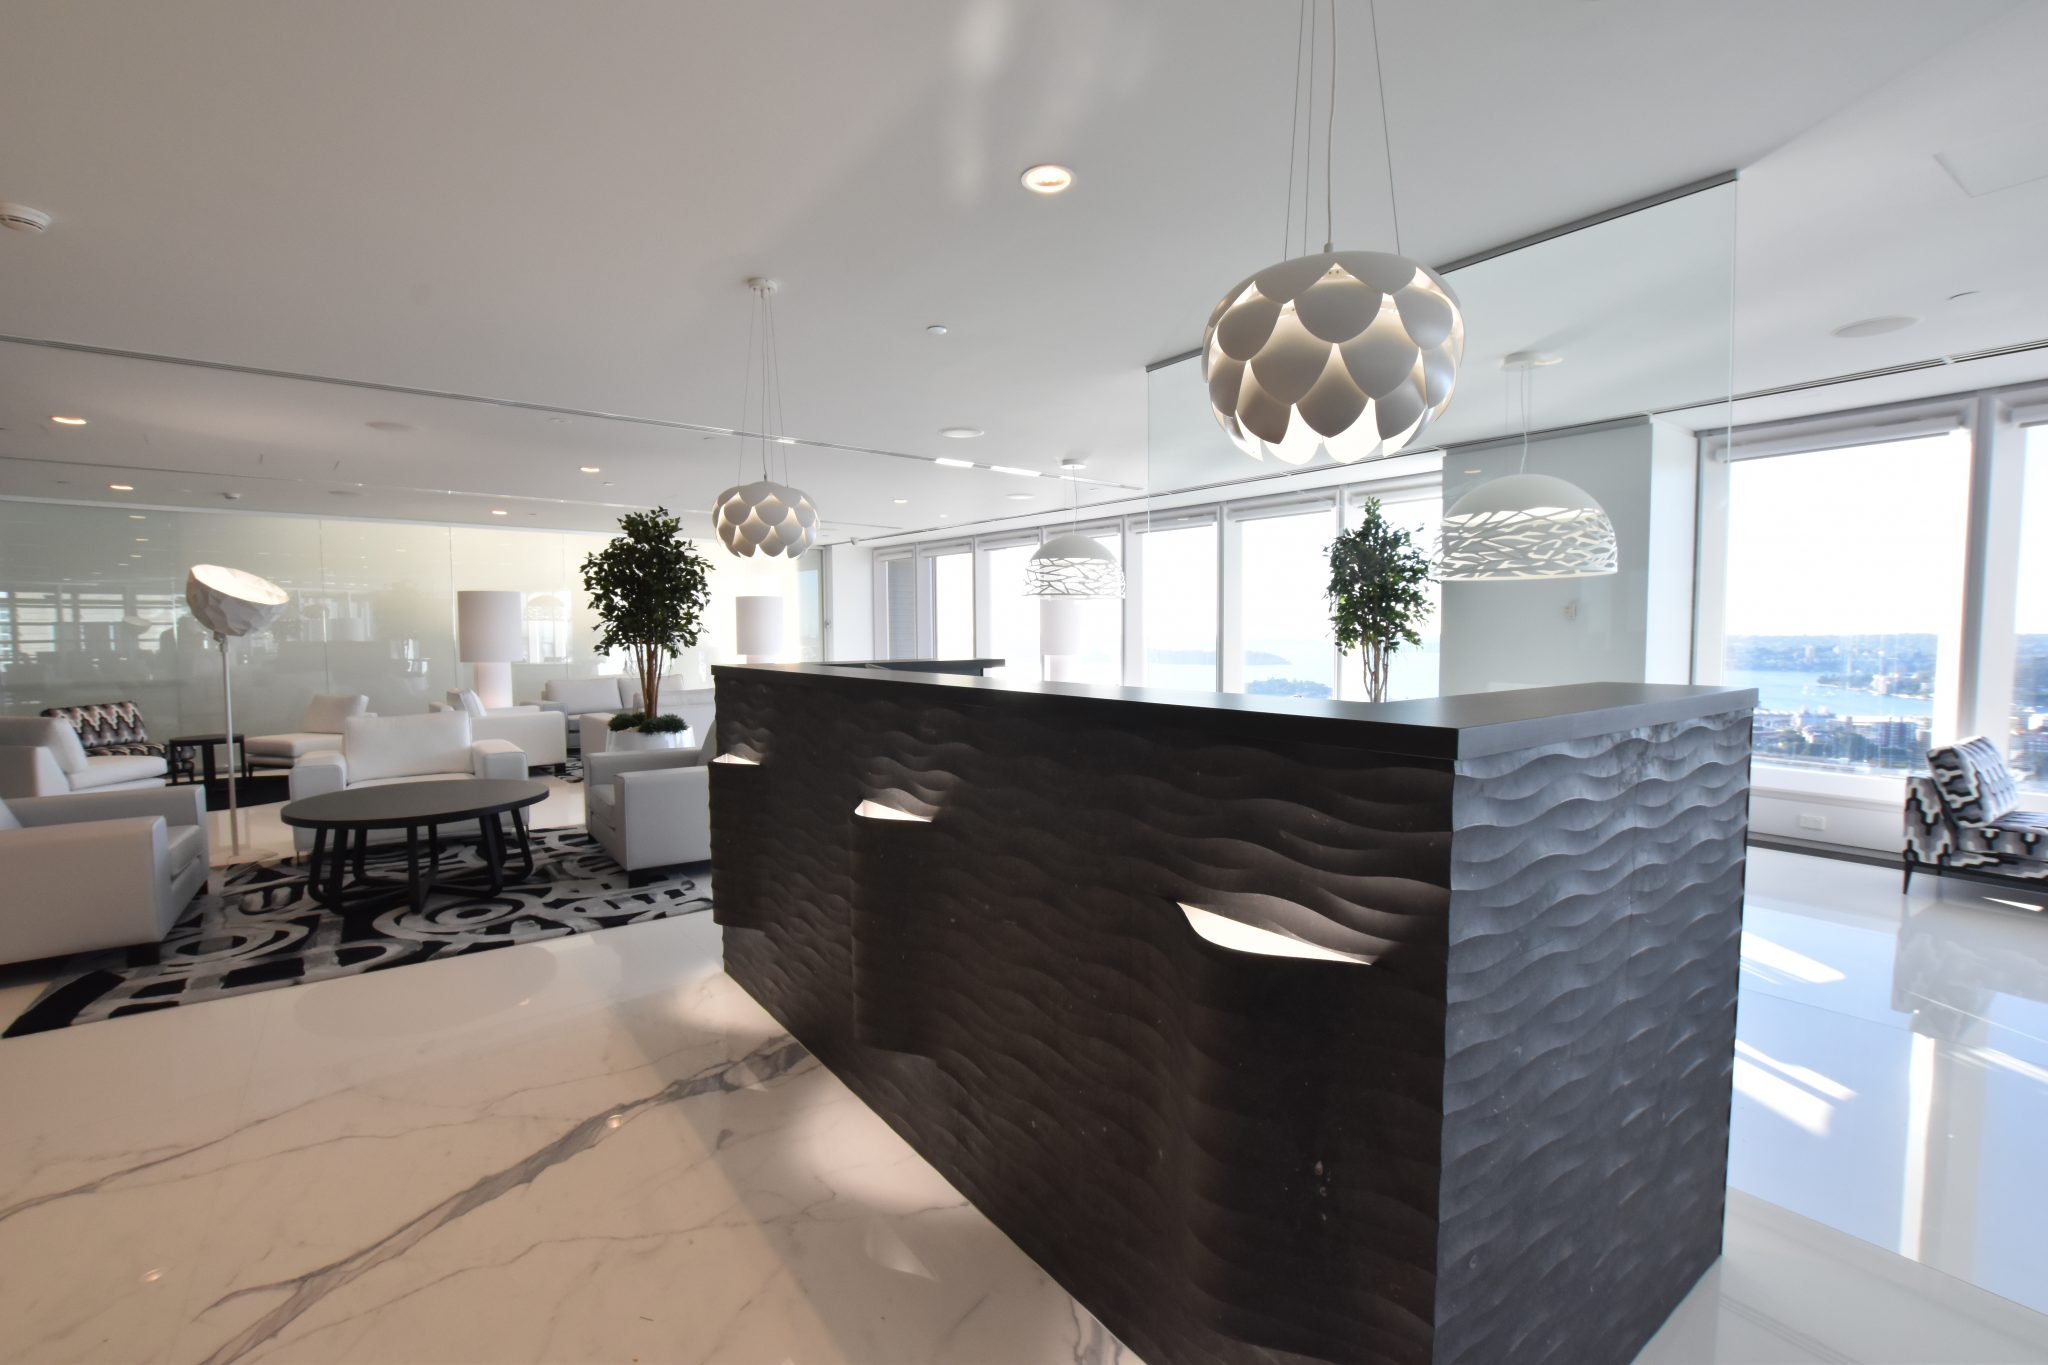 commercial office interior design